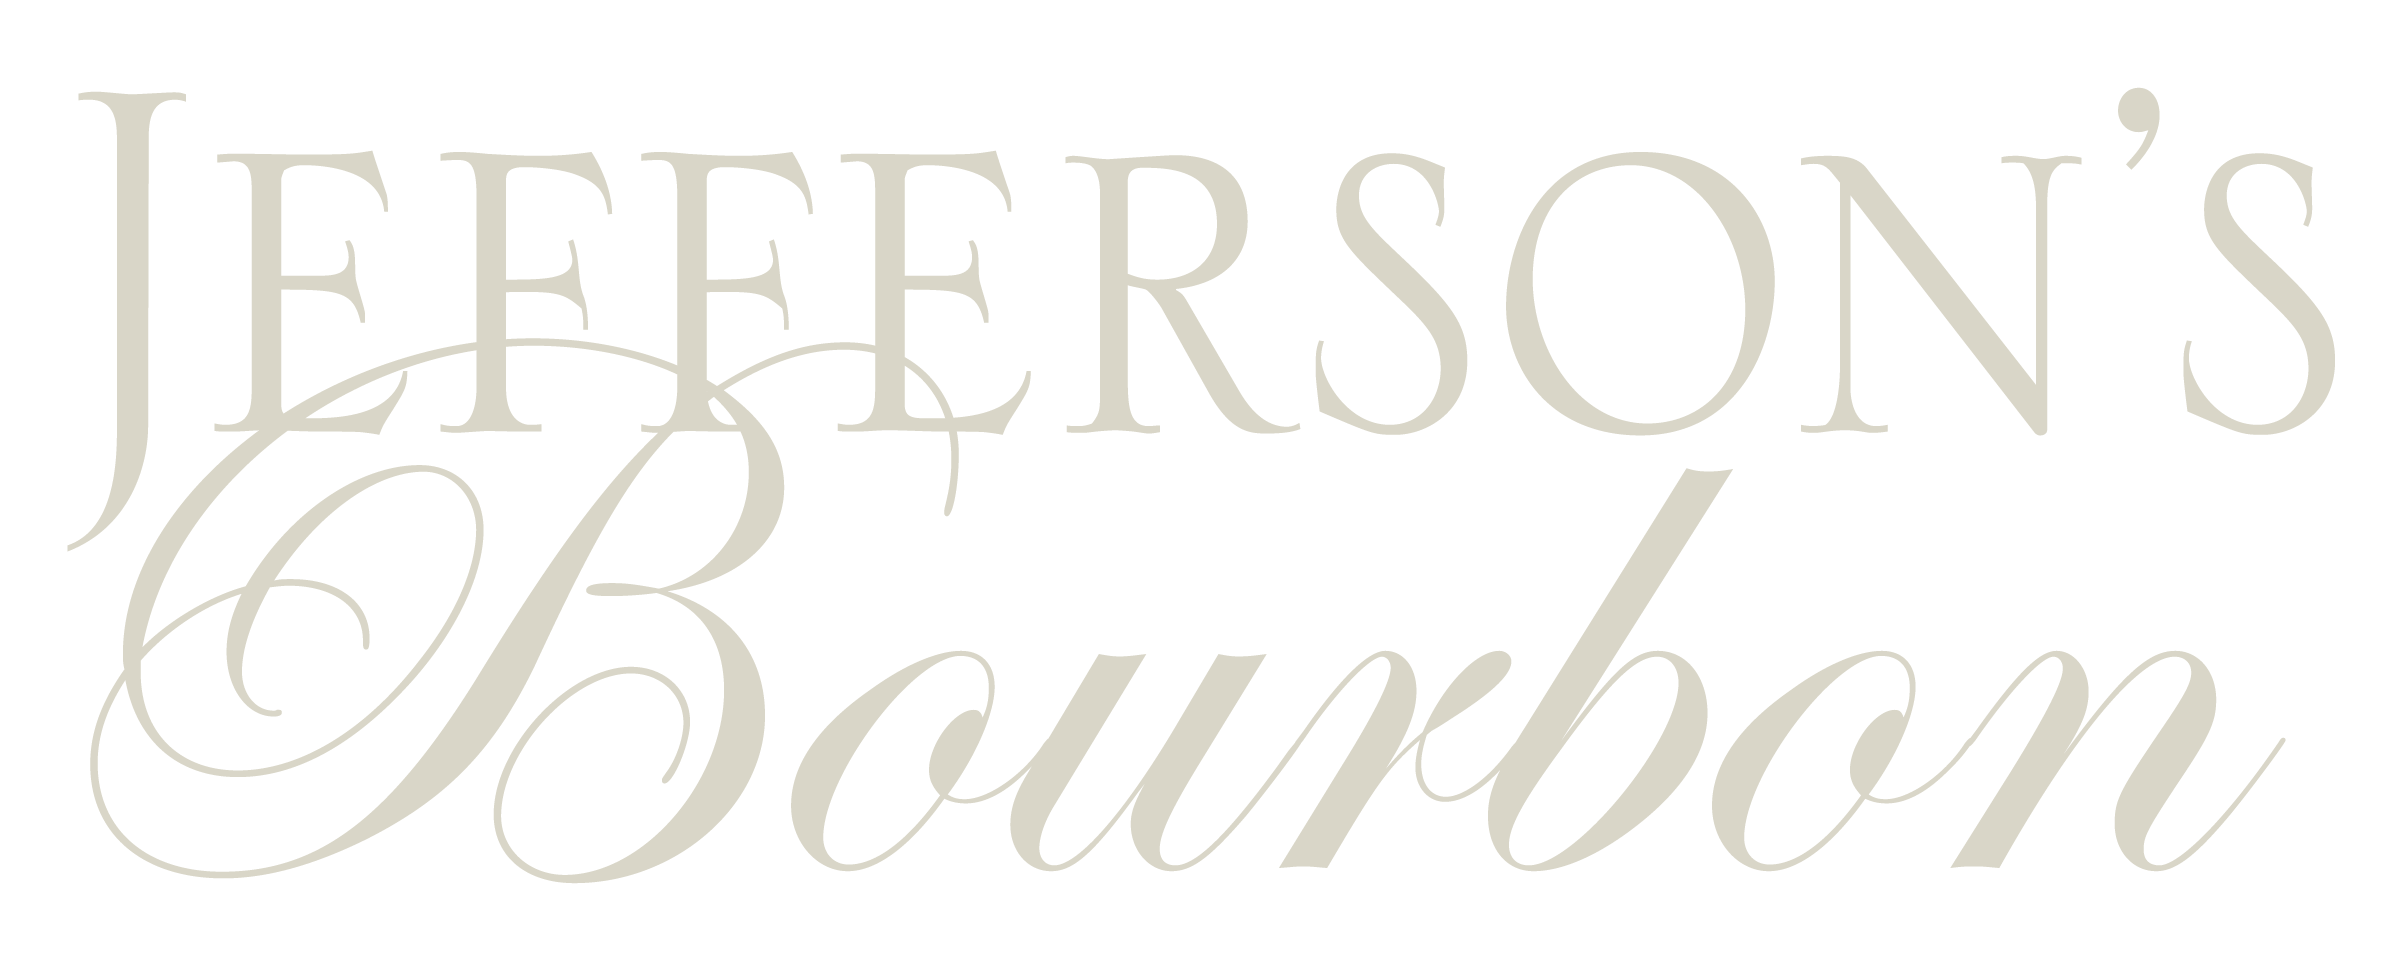 Jeffersons-Logo-01.png